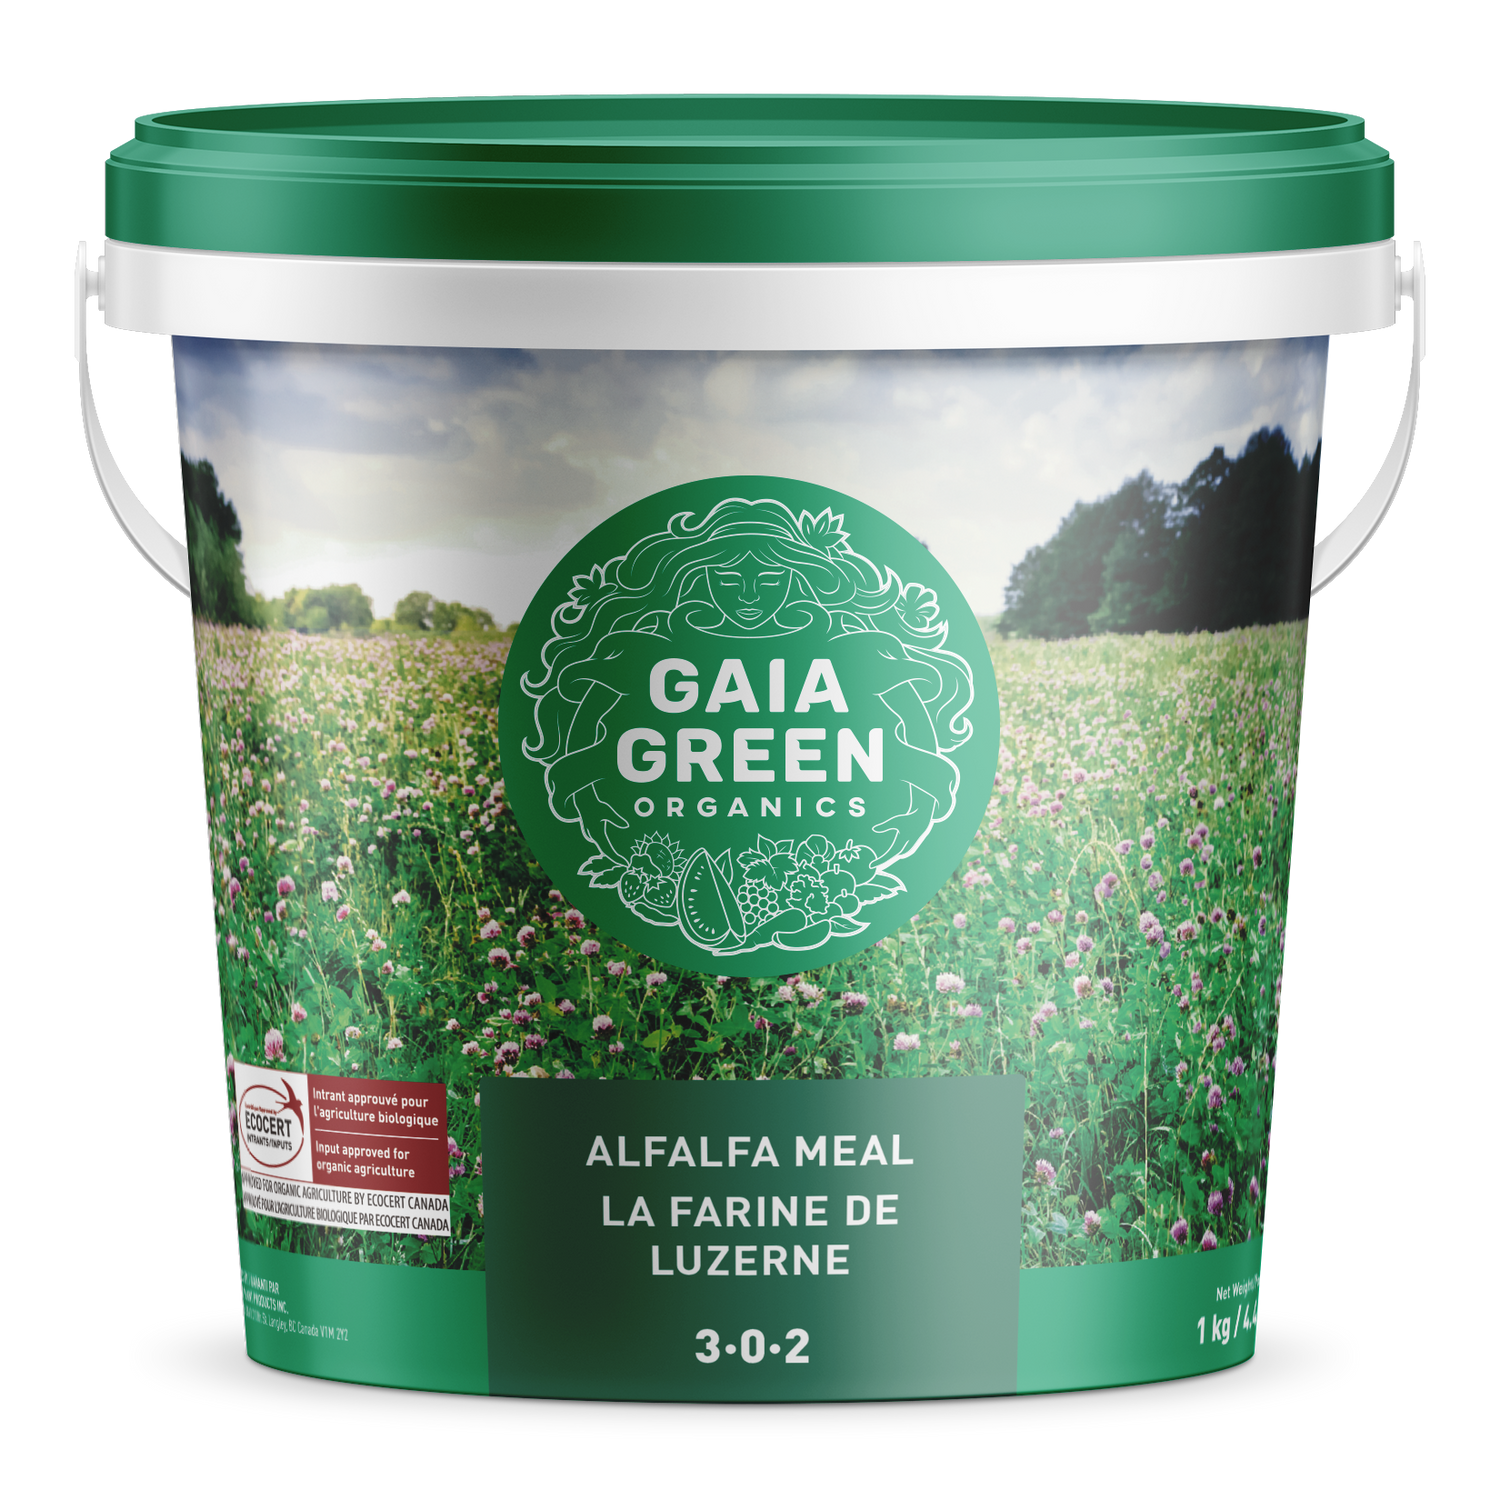 Gaia Green Alfalfa Meal 3-0-2